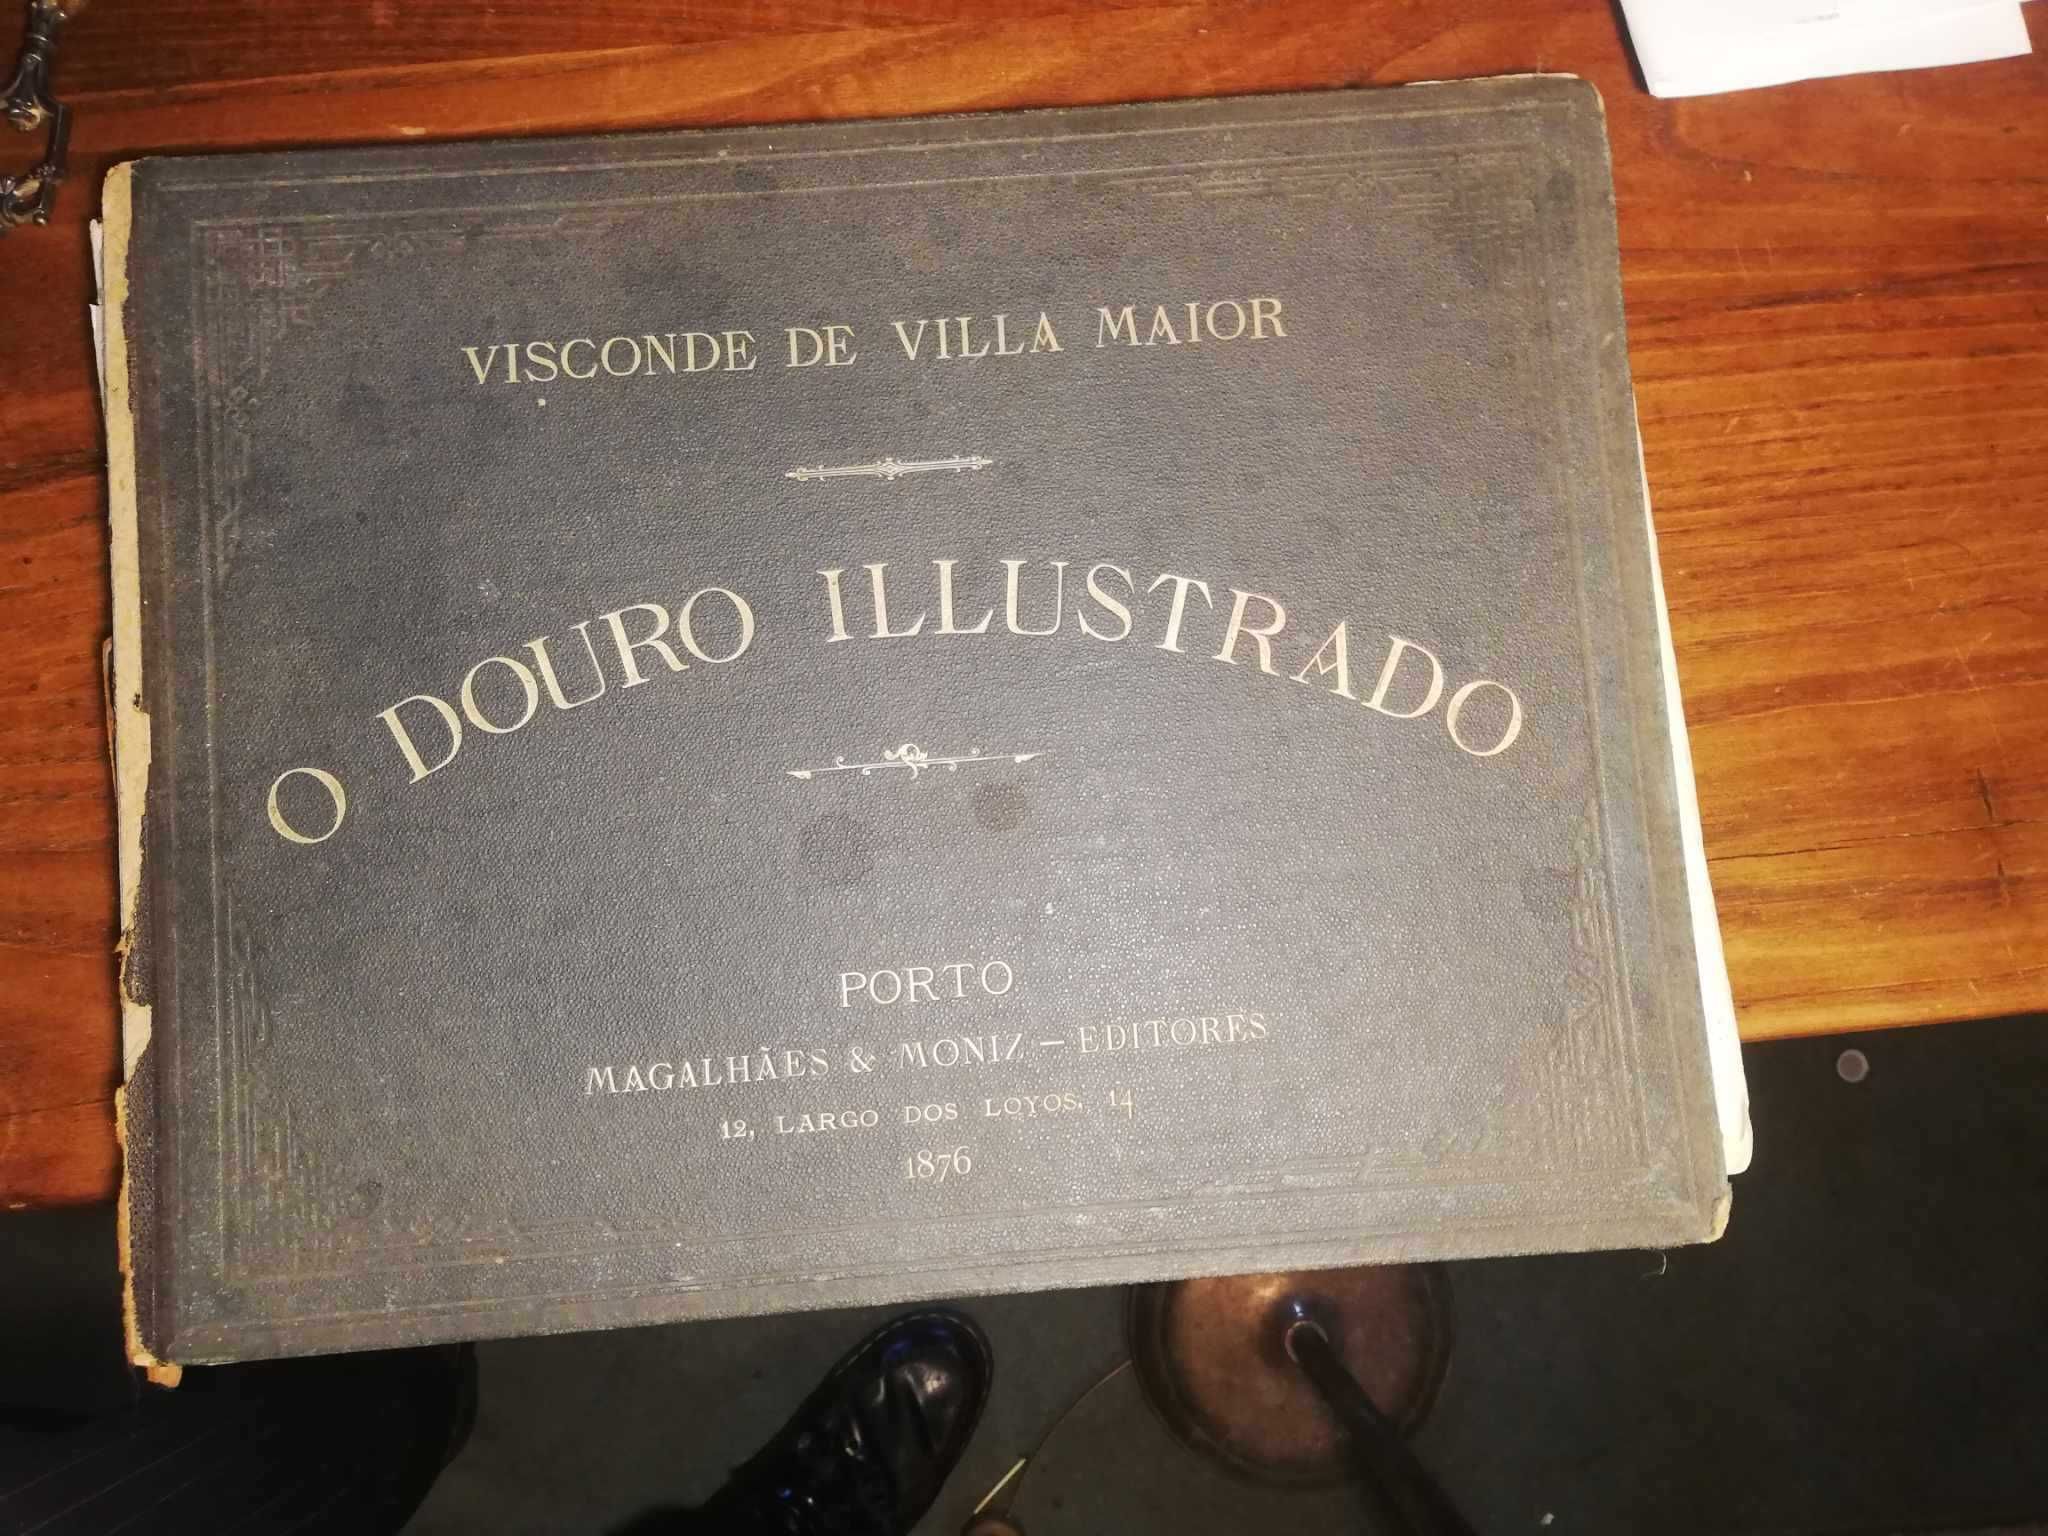 Douro Illustrado - Visconde de Vila Maior (1876)